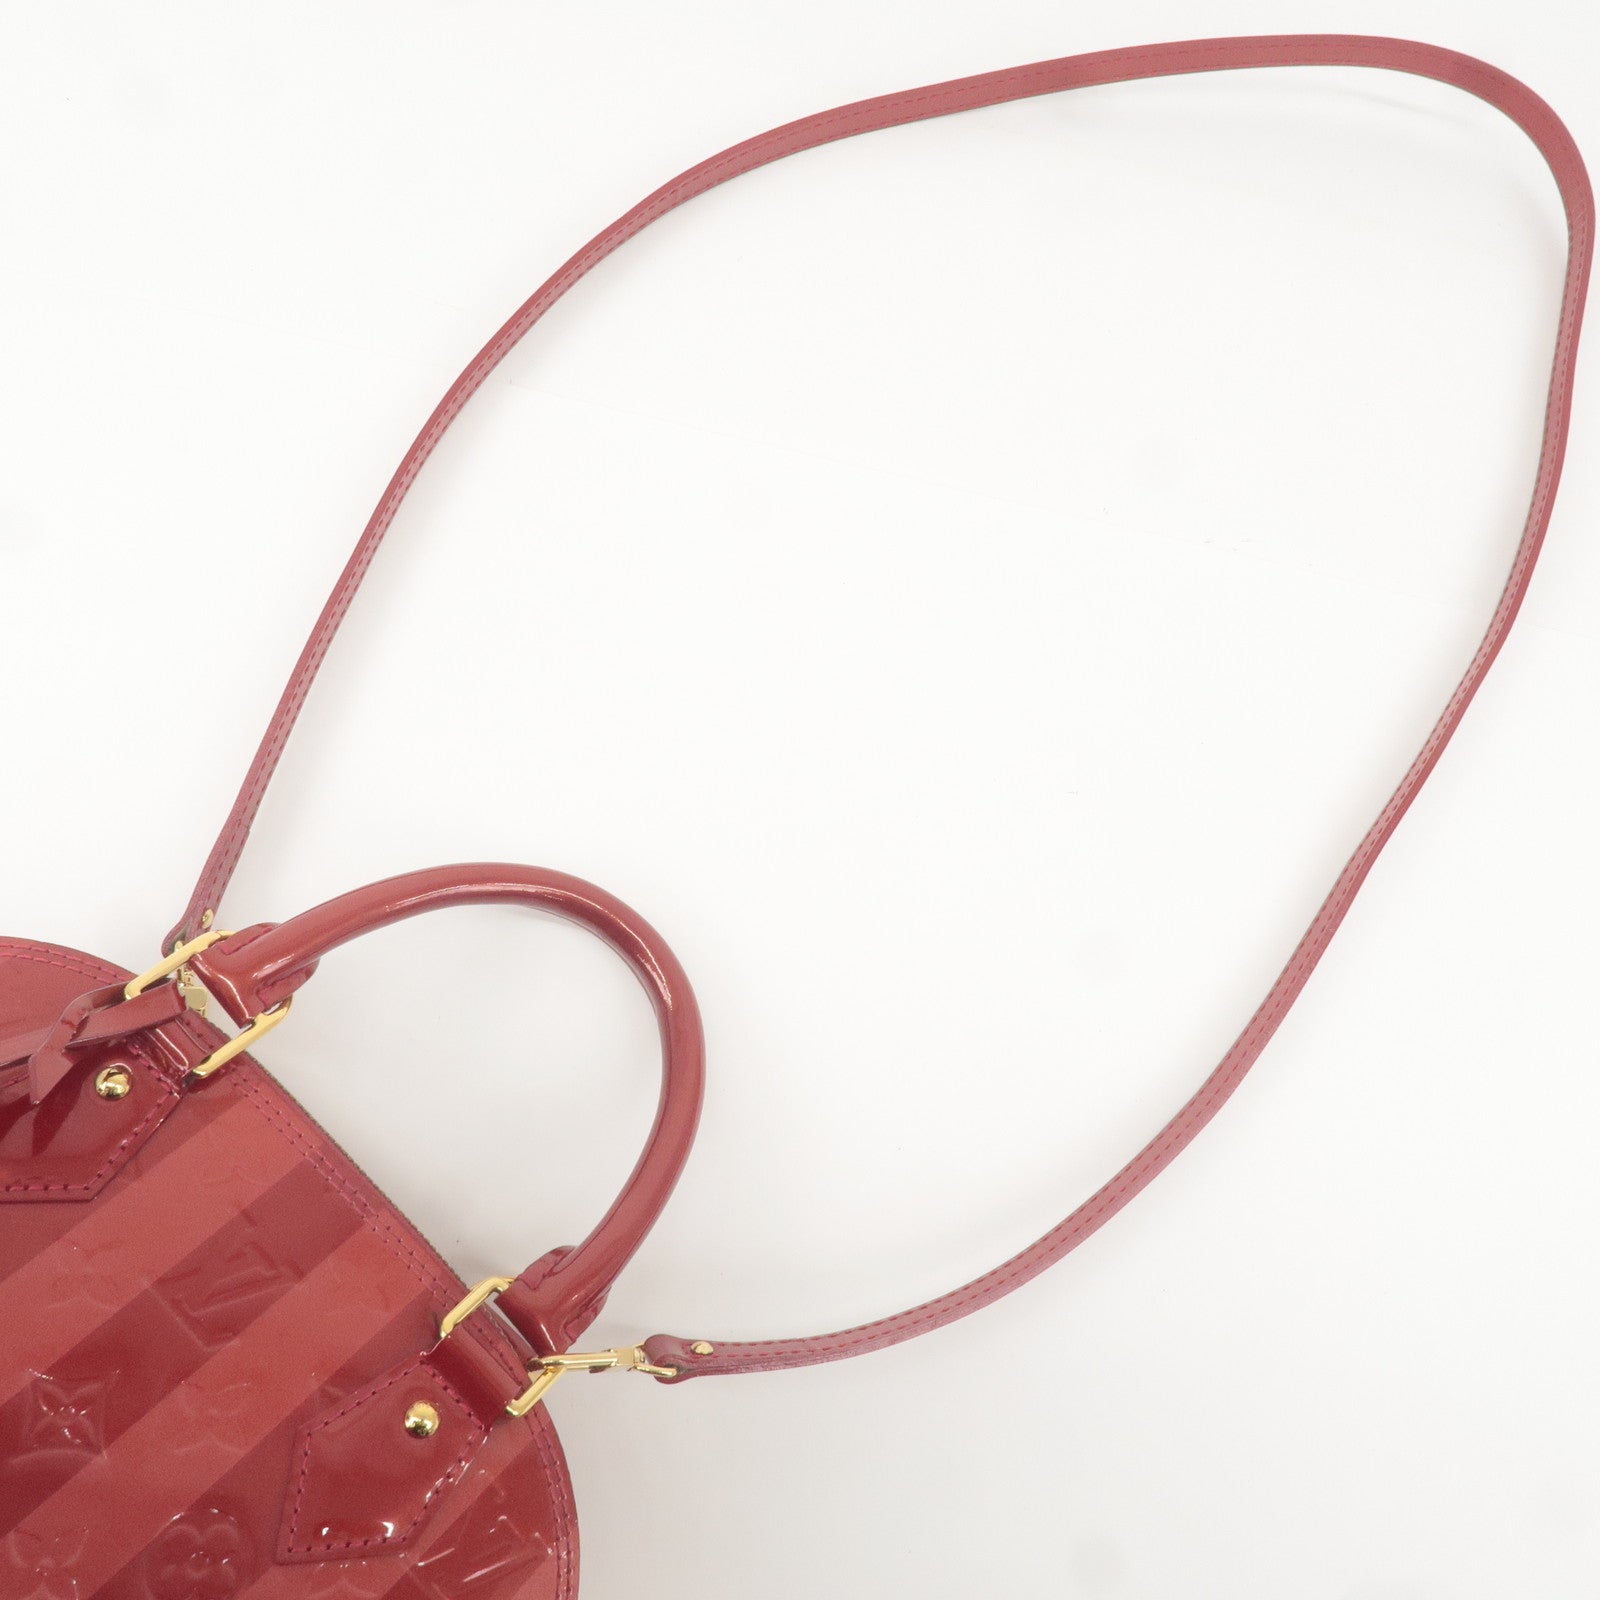 Louis Vuitton, Bags, Lv Alma Bb Red Vernis Rayunes